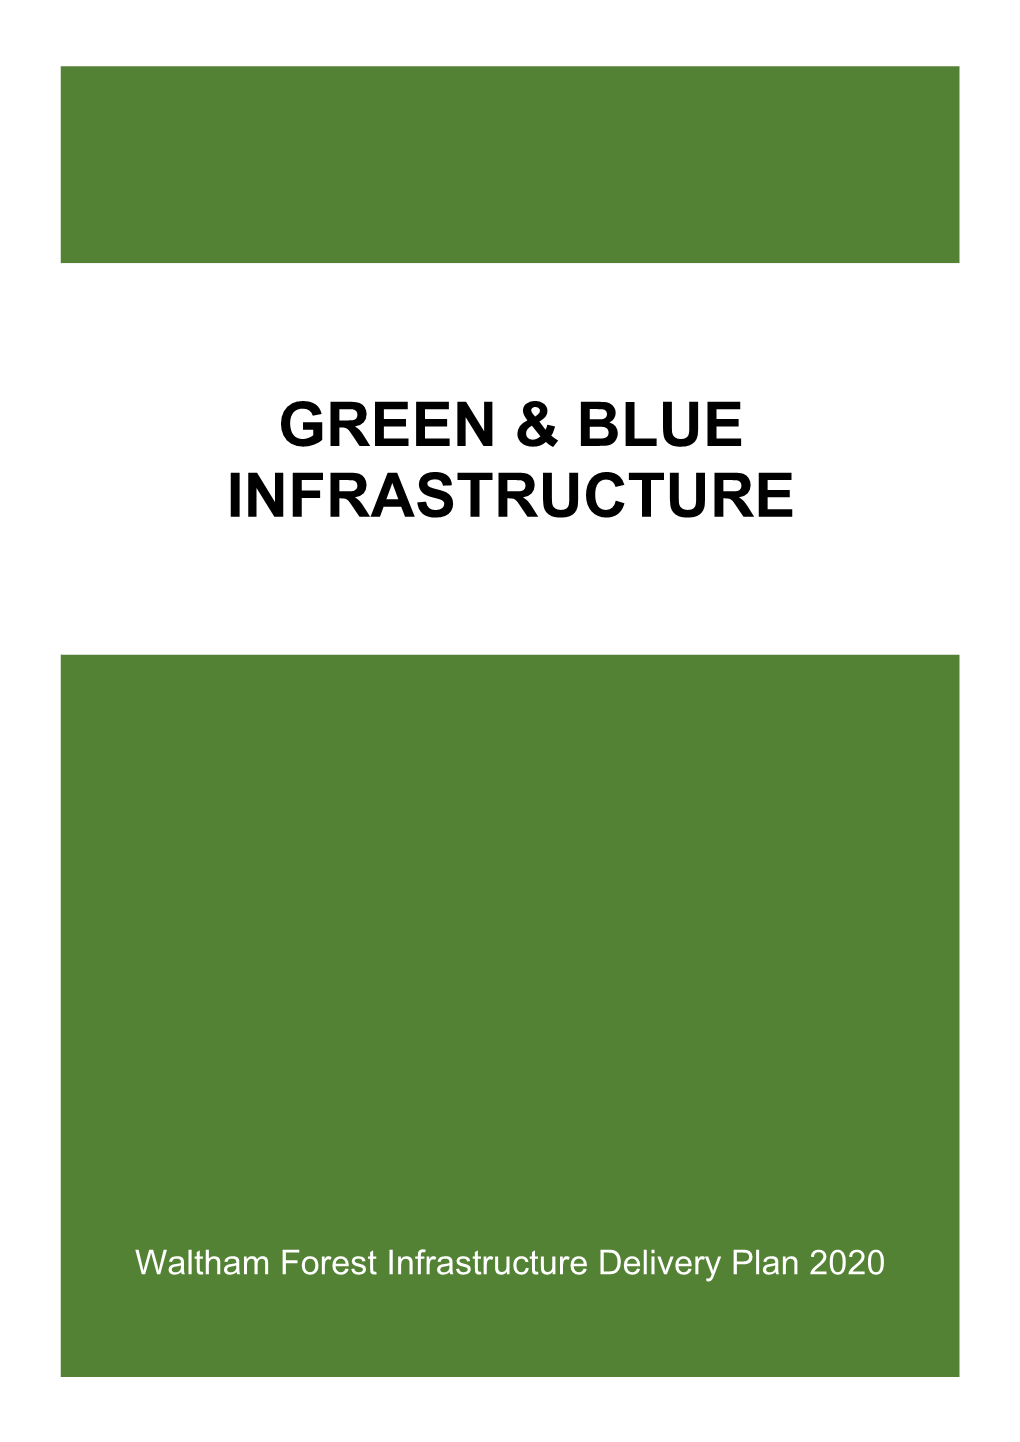 Green & Blue Infrastructure